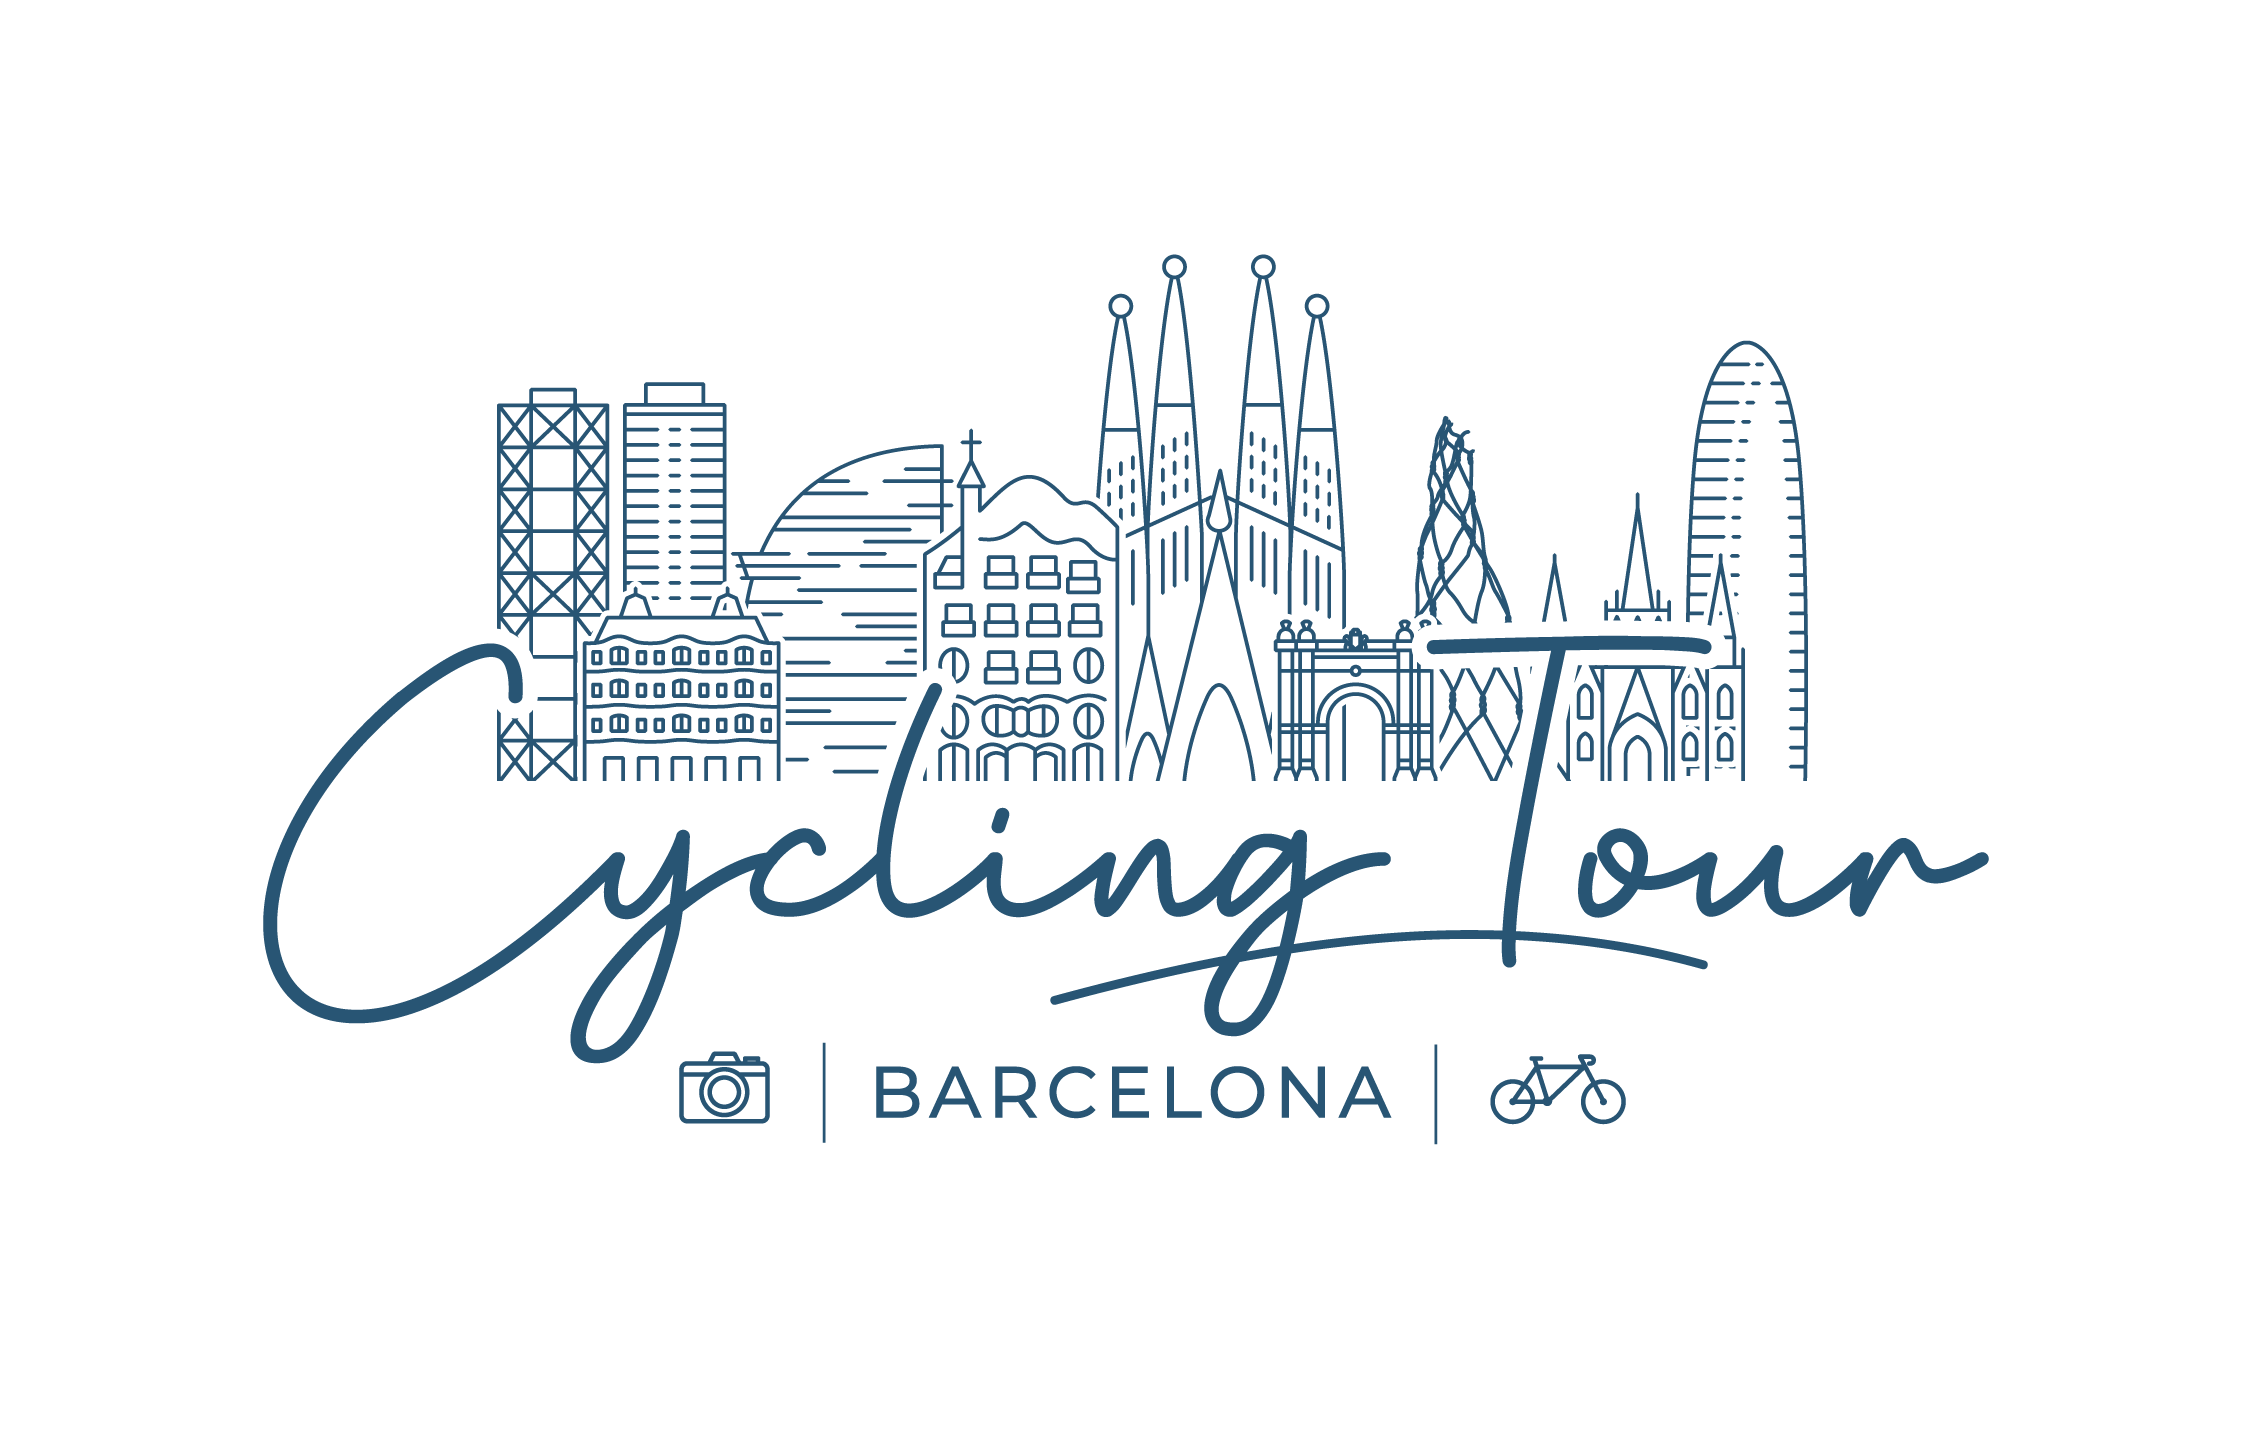 Cycling Tour Barcelona